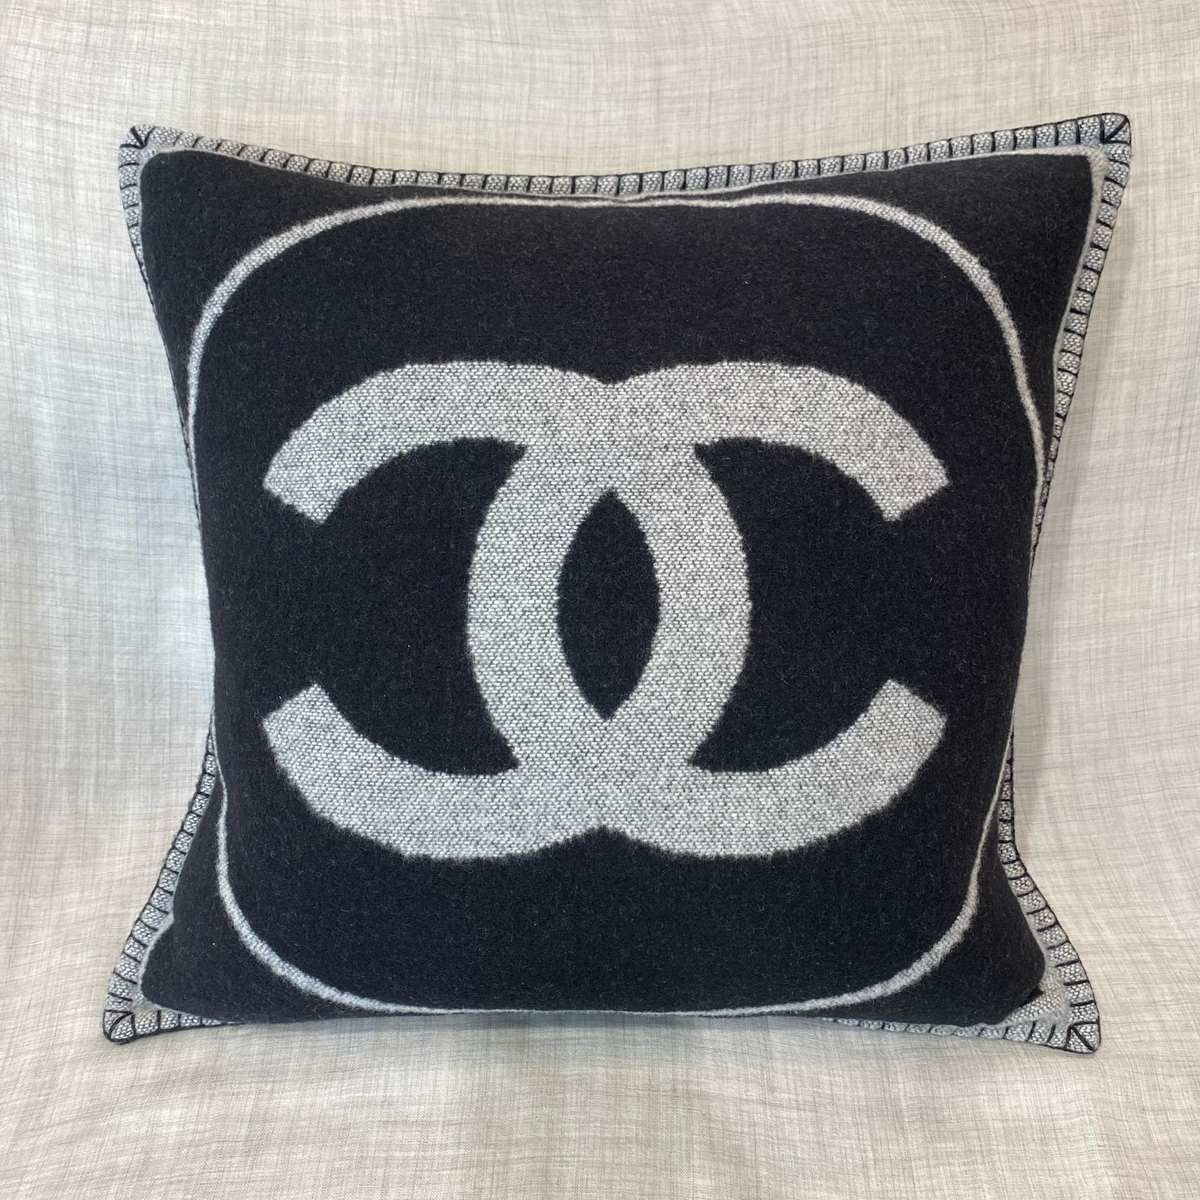 chanel pillows decorative